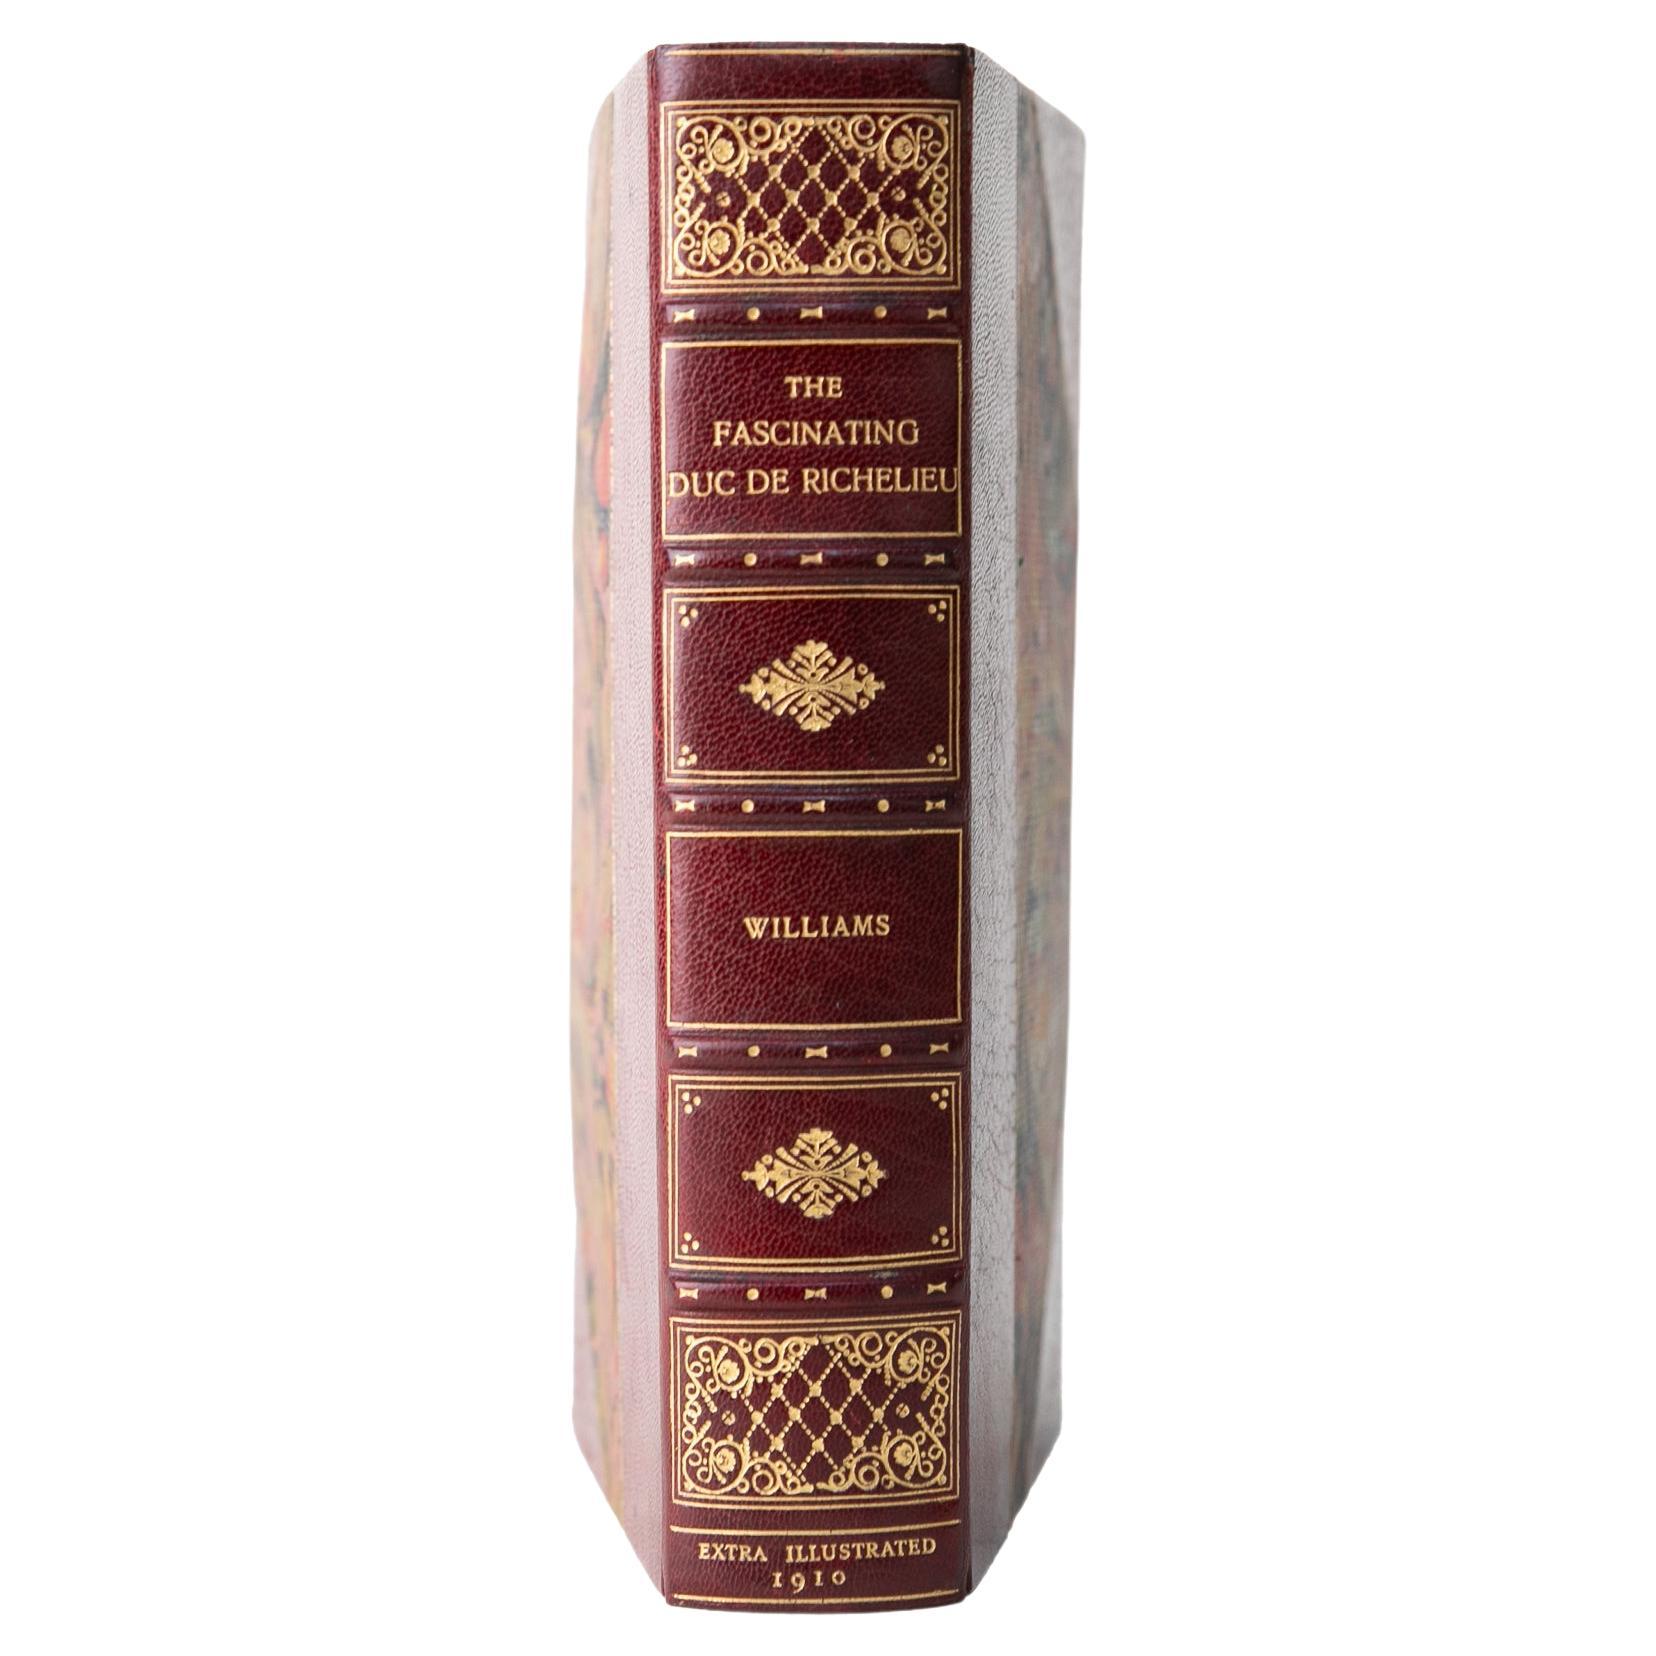 1 Volume. H. Noel Williams, The Fascinating Duc de Richelieu.